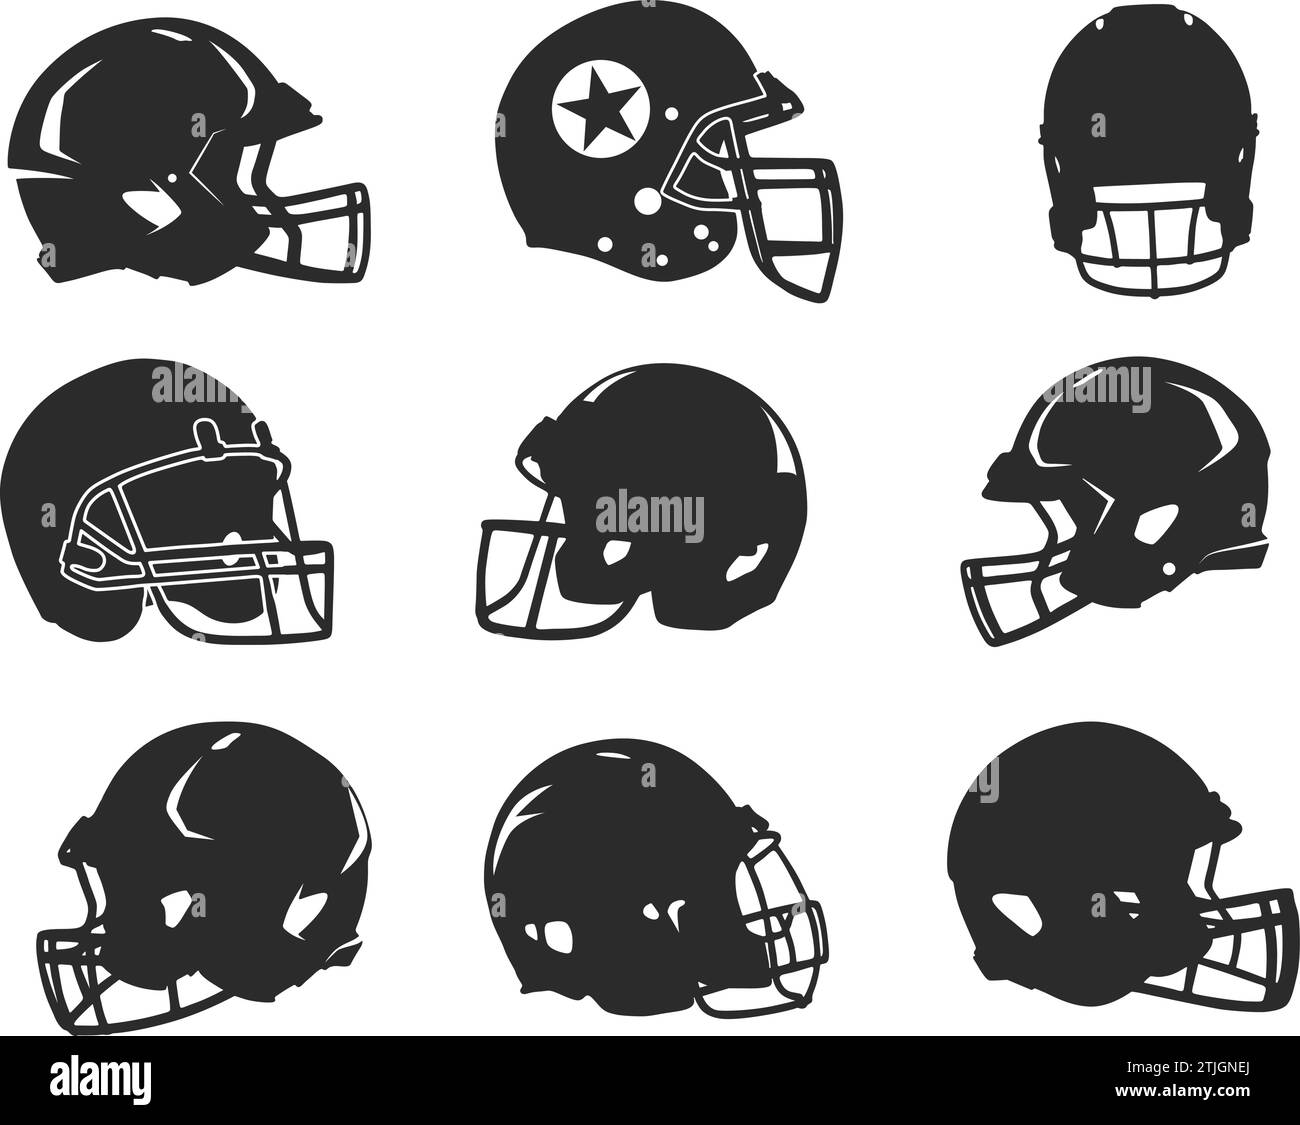 Silueta del casco de fútbol americano, silueta del casco, icono del casco de fútbol, ilustración vectorial del casco de fútbol. Ilustración del Vector